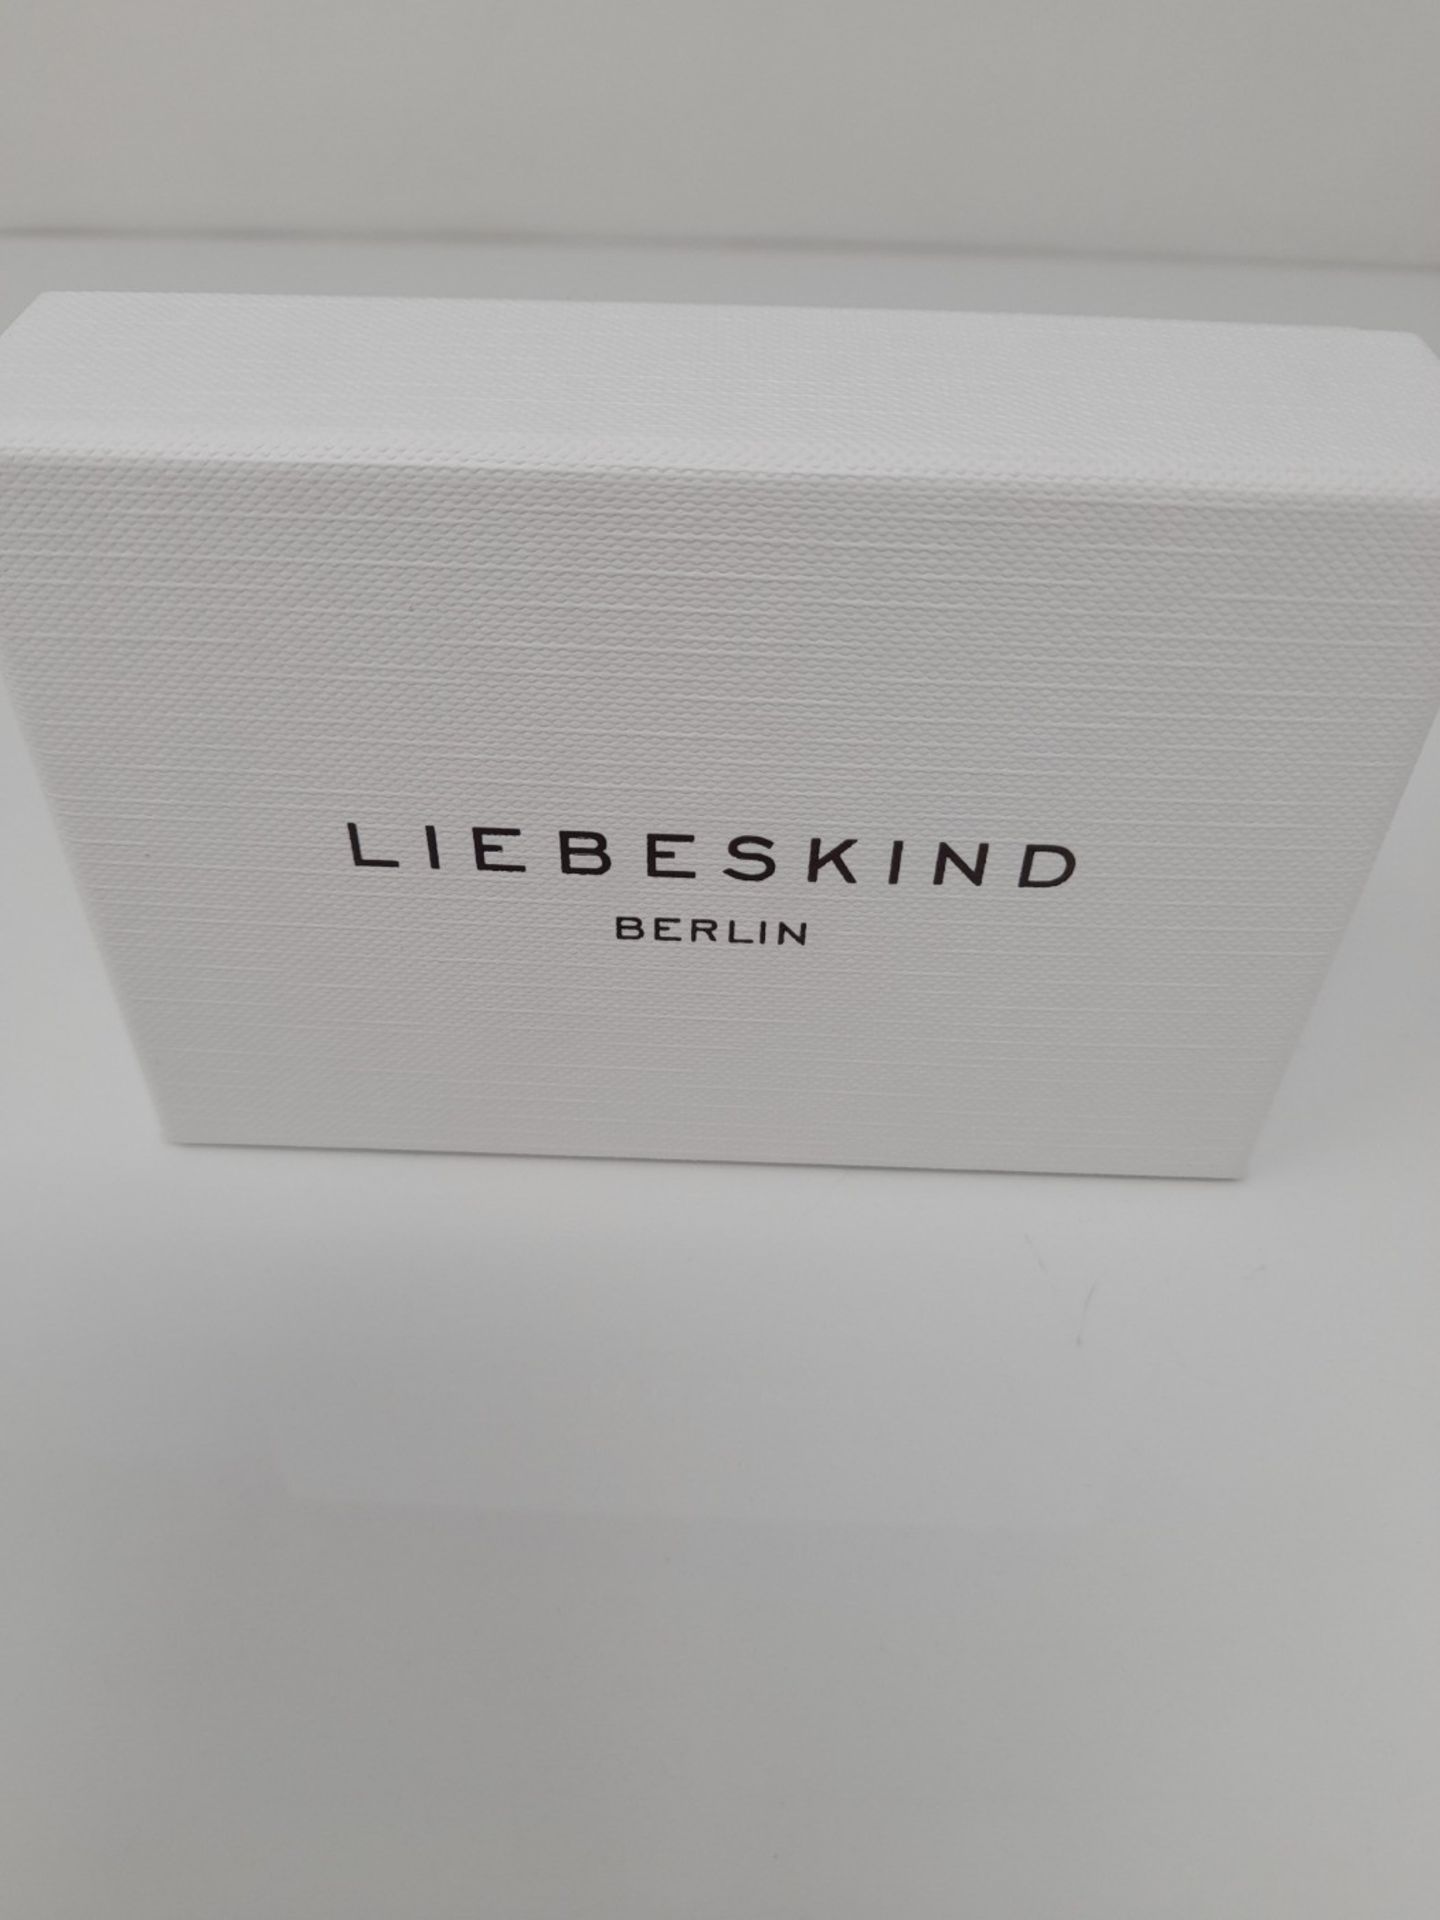 [CRACKED] Liebeskind Berlin Damen Armband Herz Edelstahl Silber 20 cm (schwarz), LJ-03 - Image 2 of 3